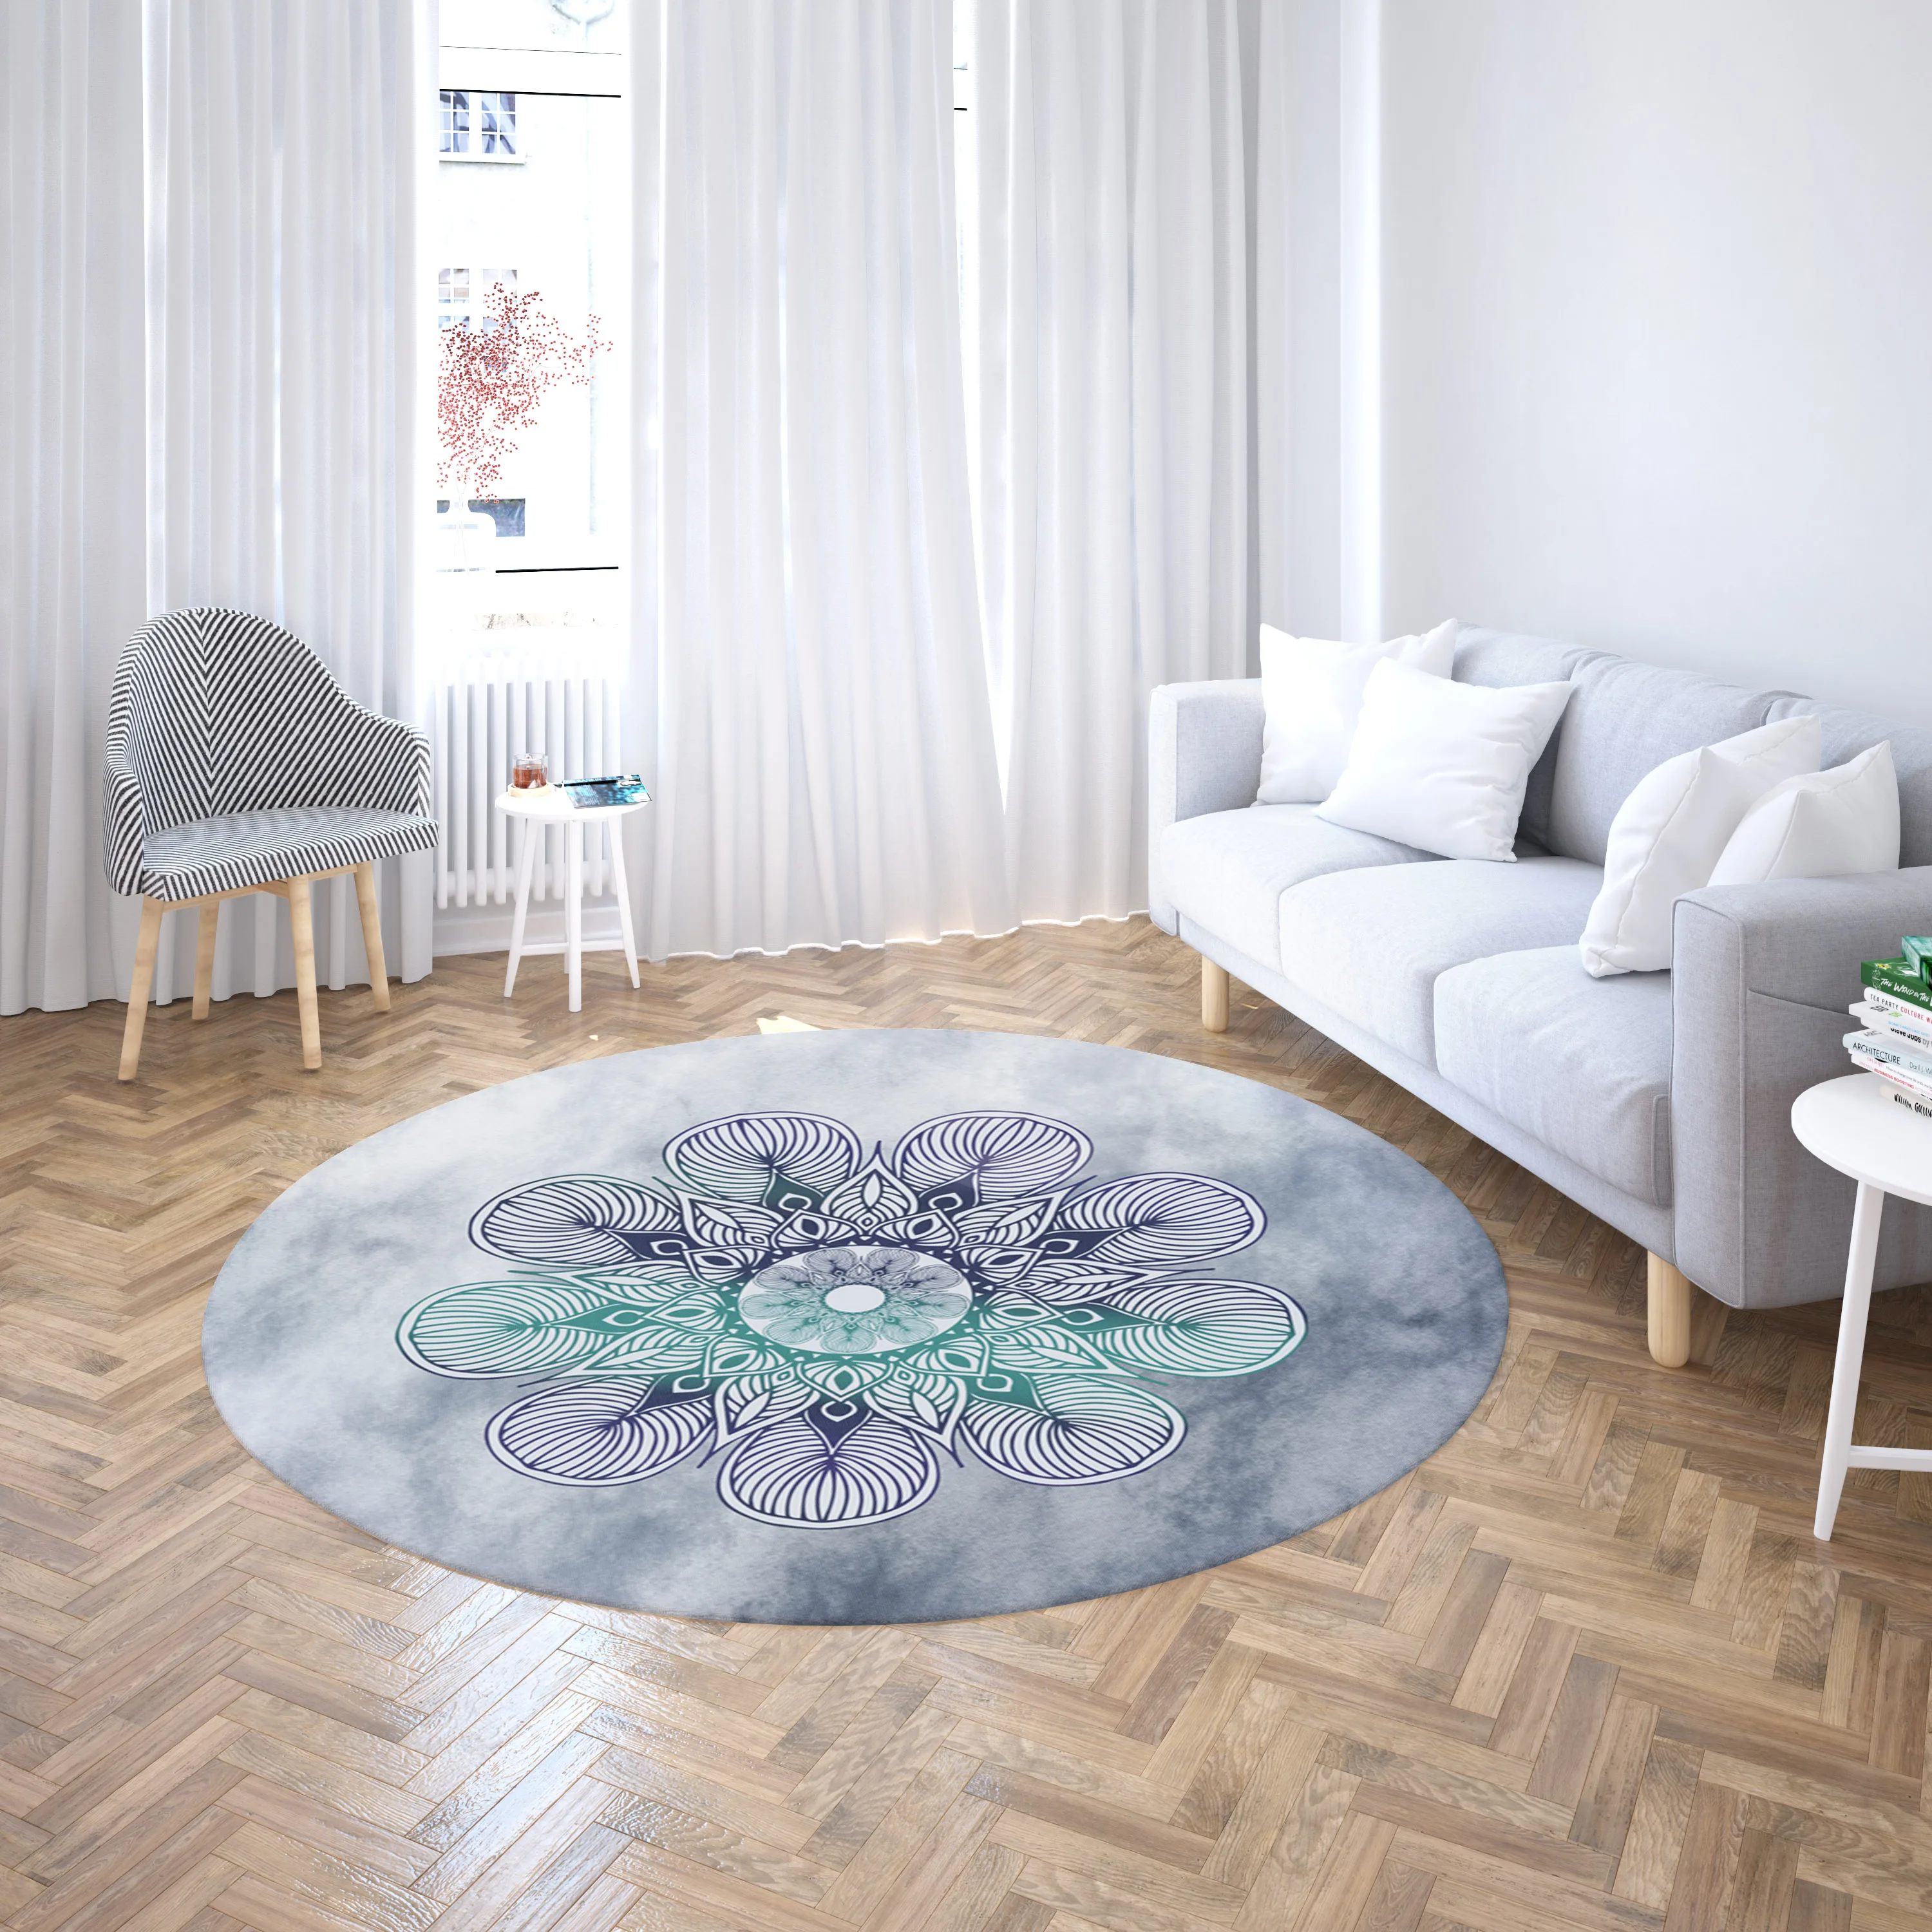 

Mandala Round Rugs Large Bedroom Entrance Doormat Home Floor Mat Decoration Living Room Printed Large Area Carpets